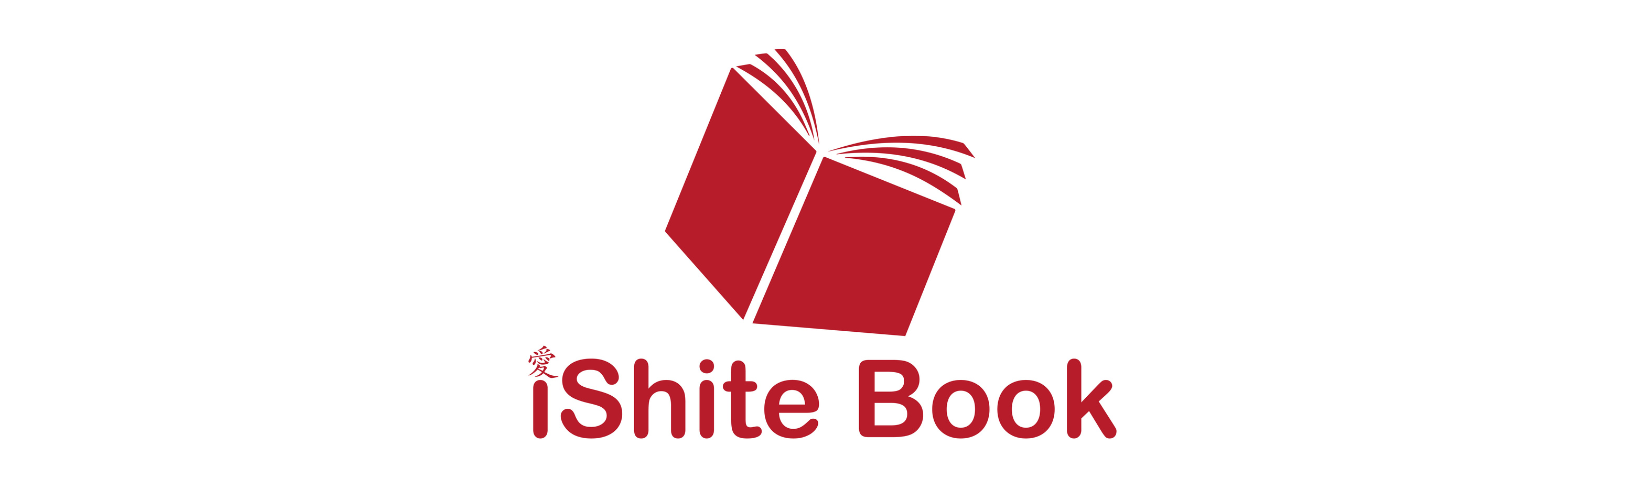 logo iShite Book